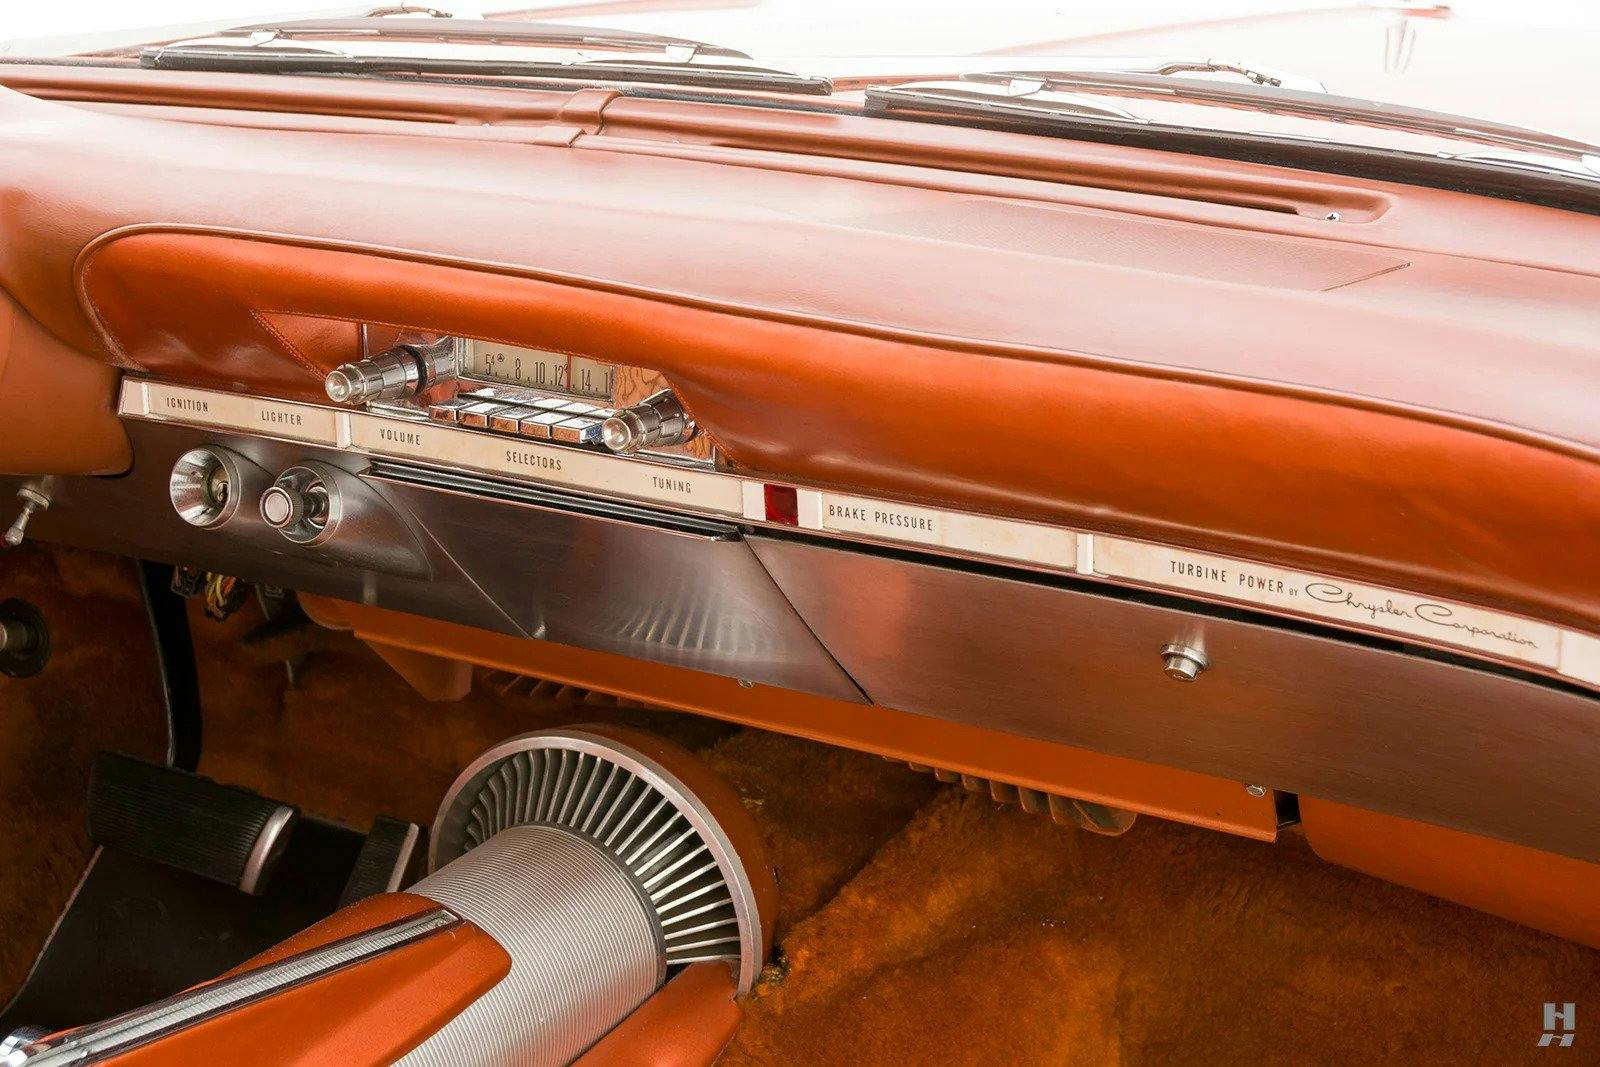 1963 Chrysler Turbine Car engine bay interior dash